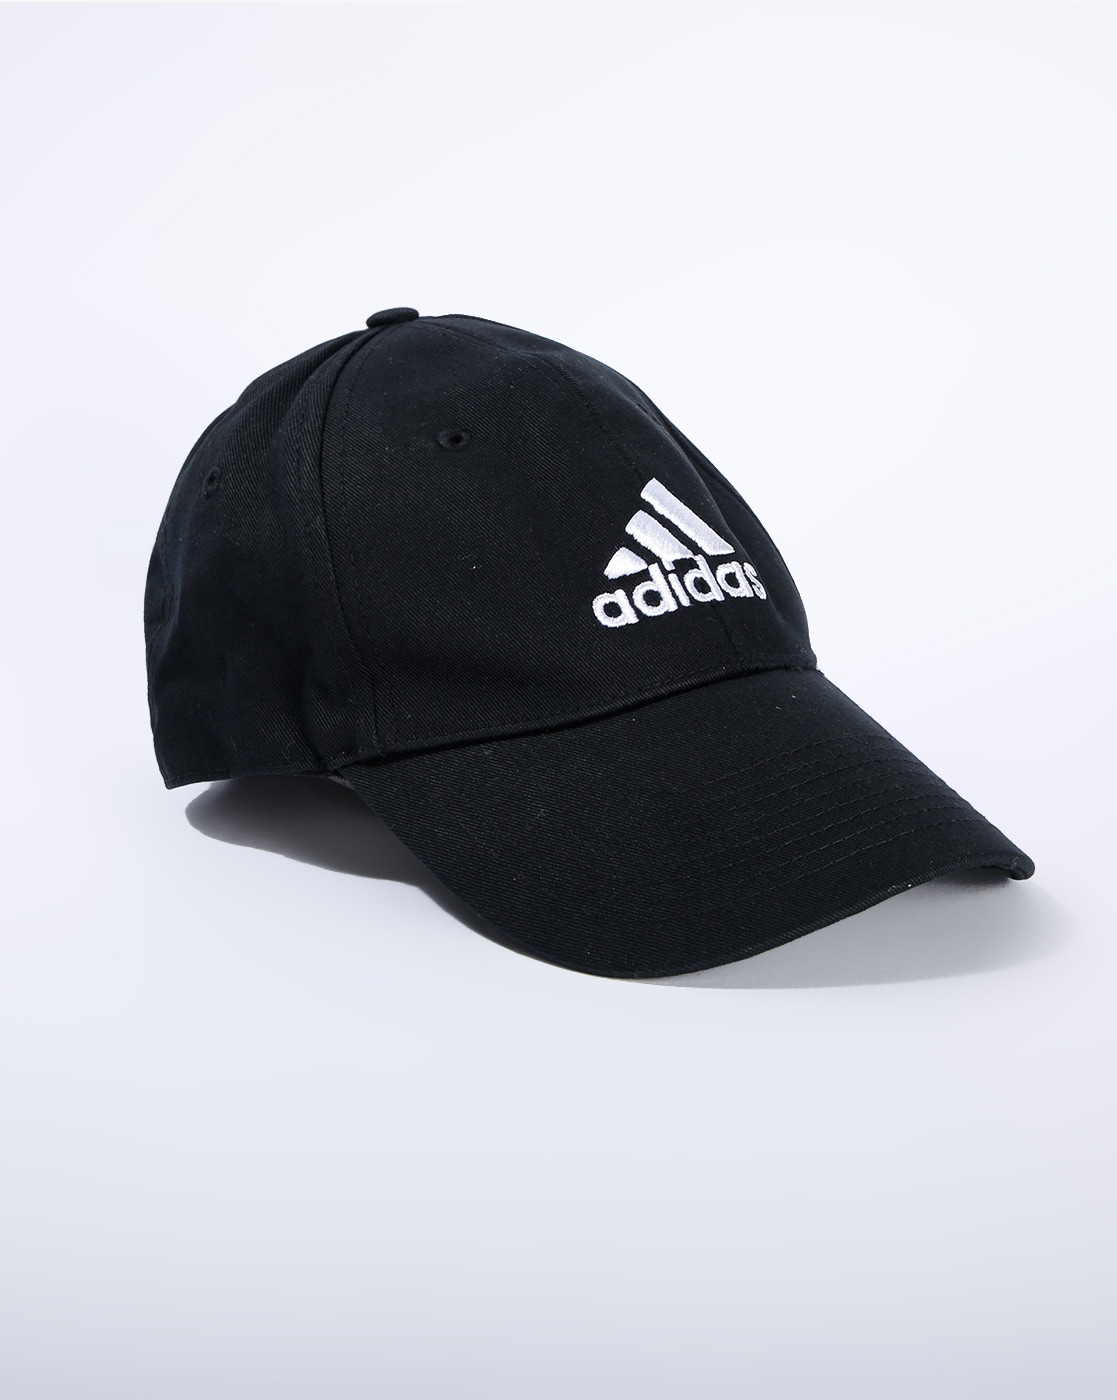 Buy Black Caps \u0026 Hats for Men by ADIDAS 